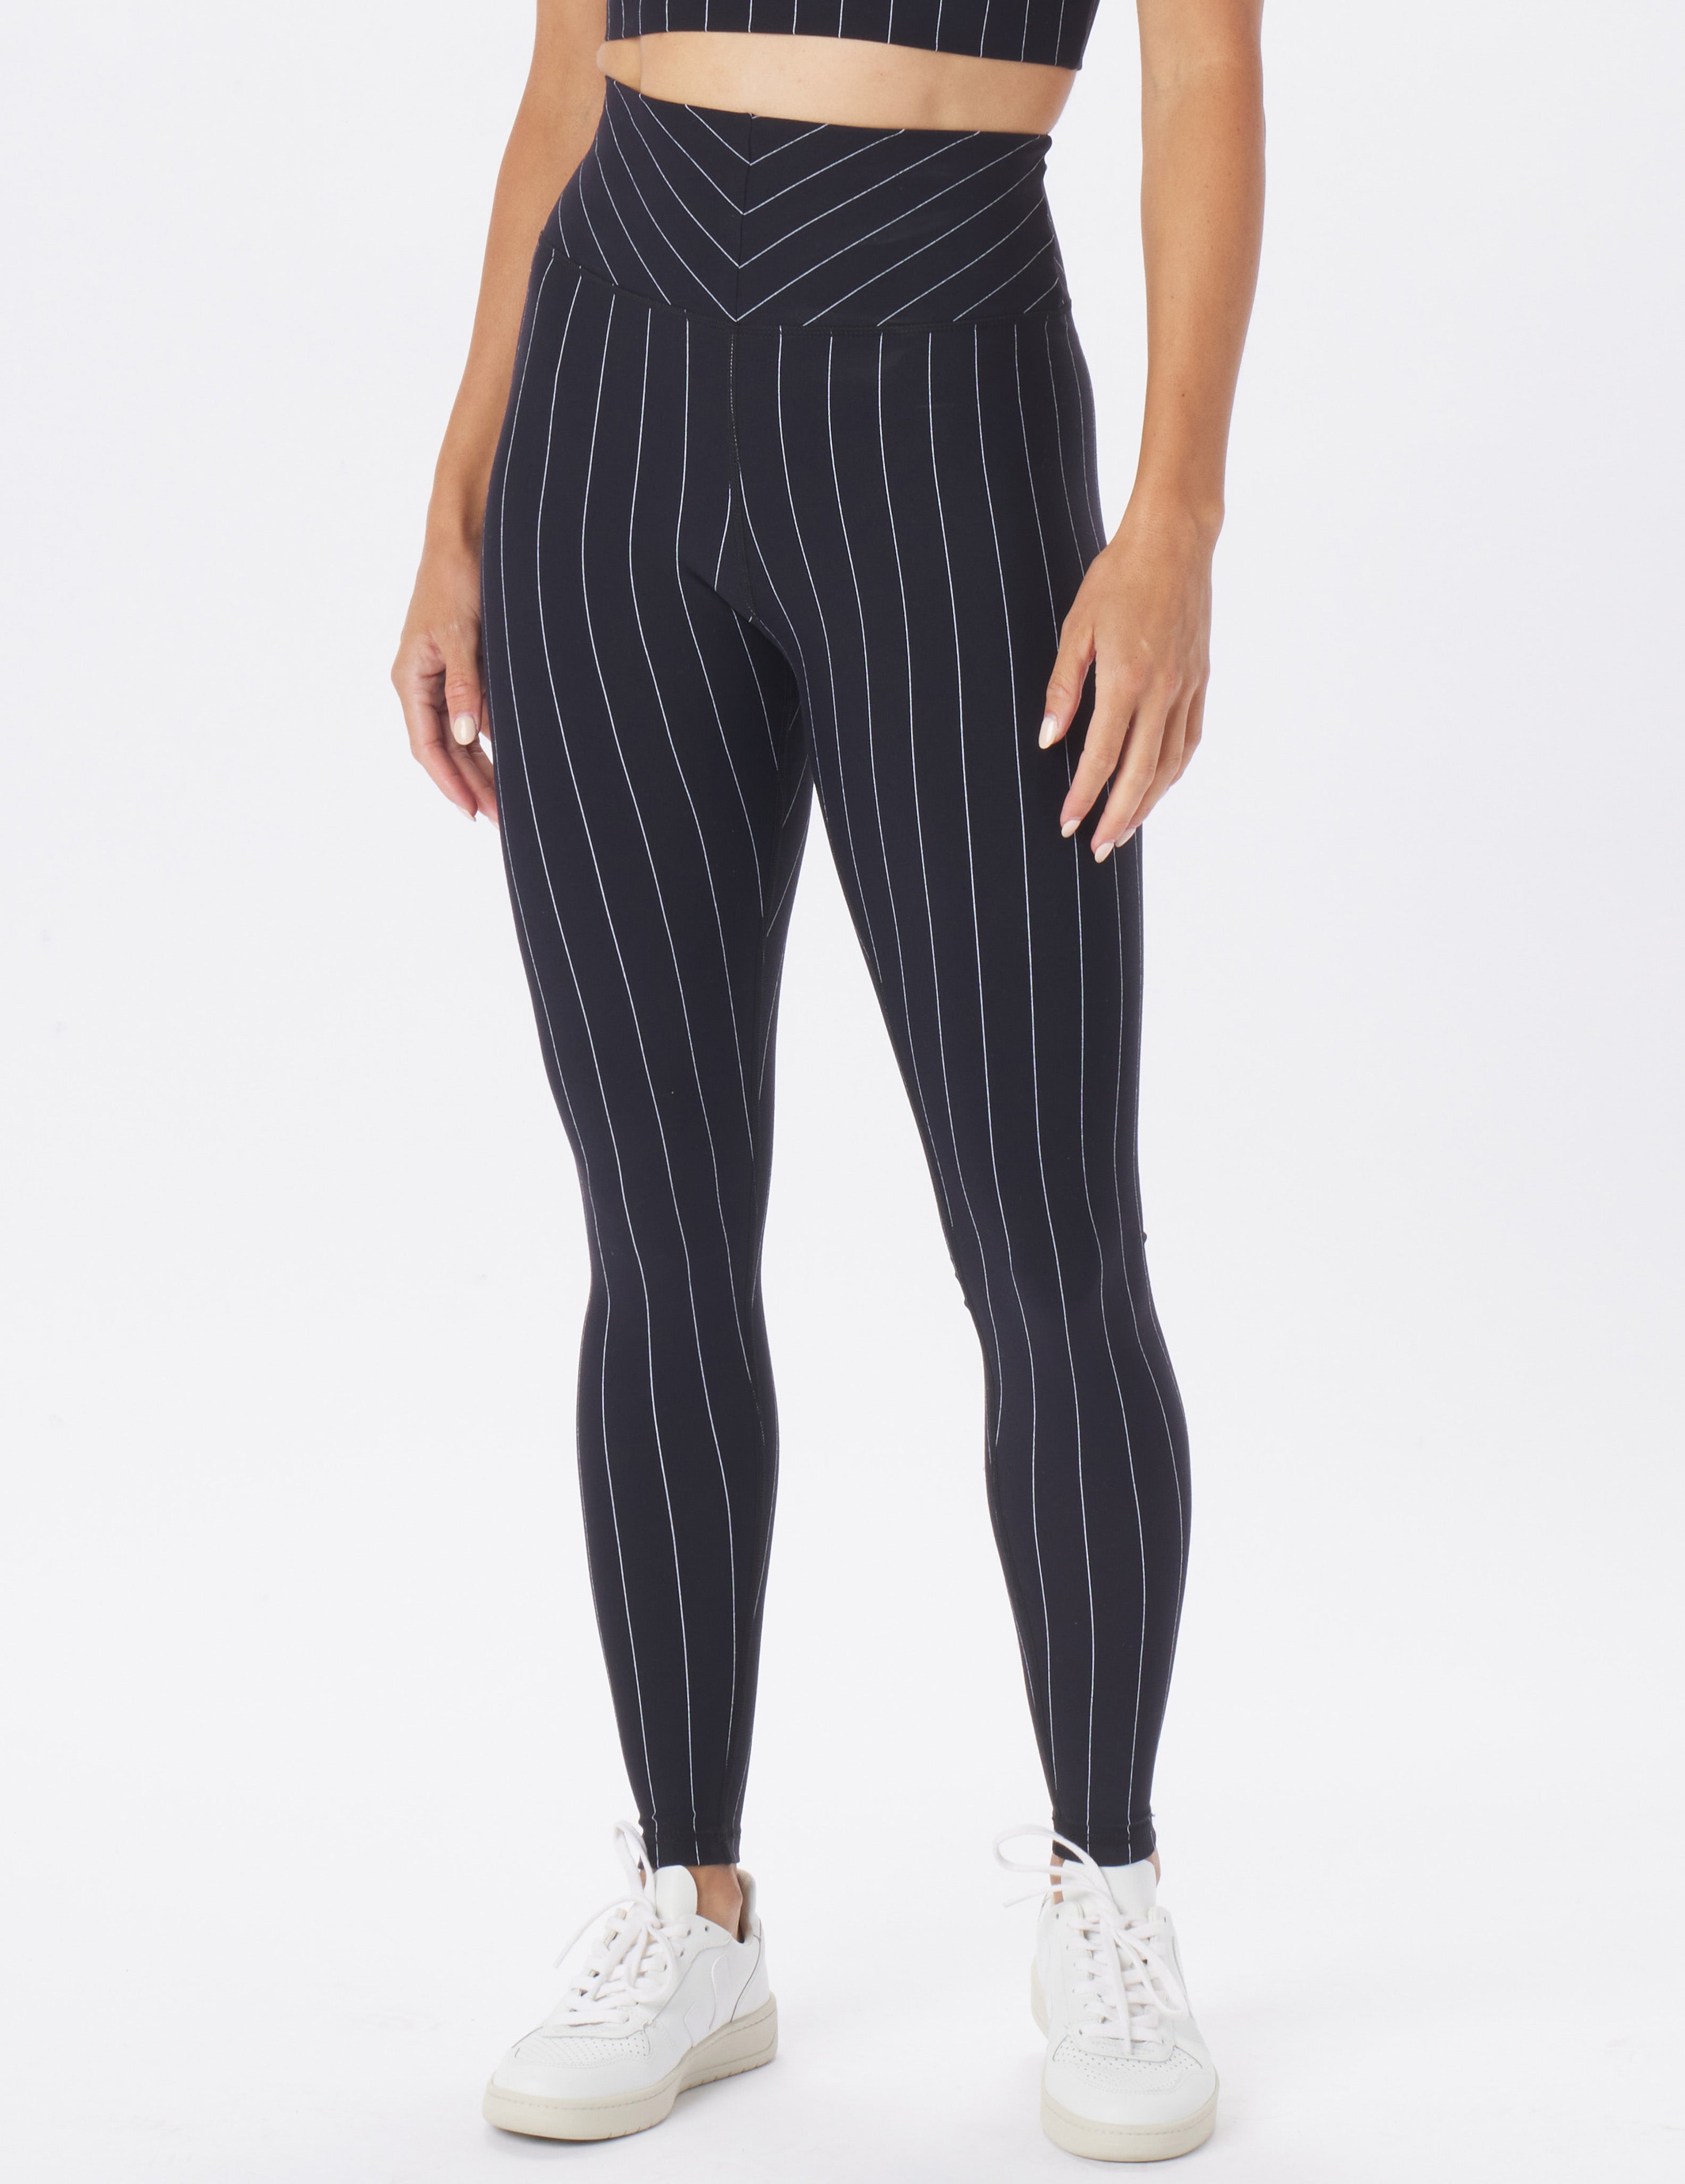 Nylon Striped Tights, Womens Pantyhose, Hosiery | Leg Avenue